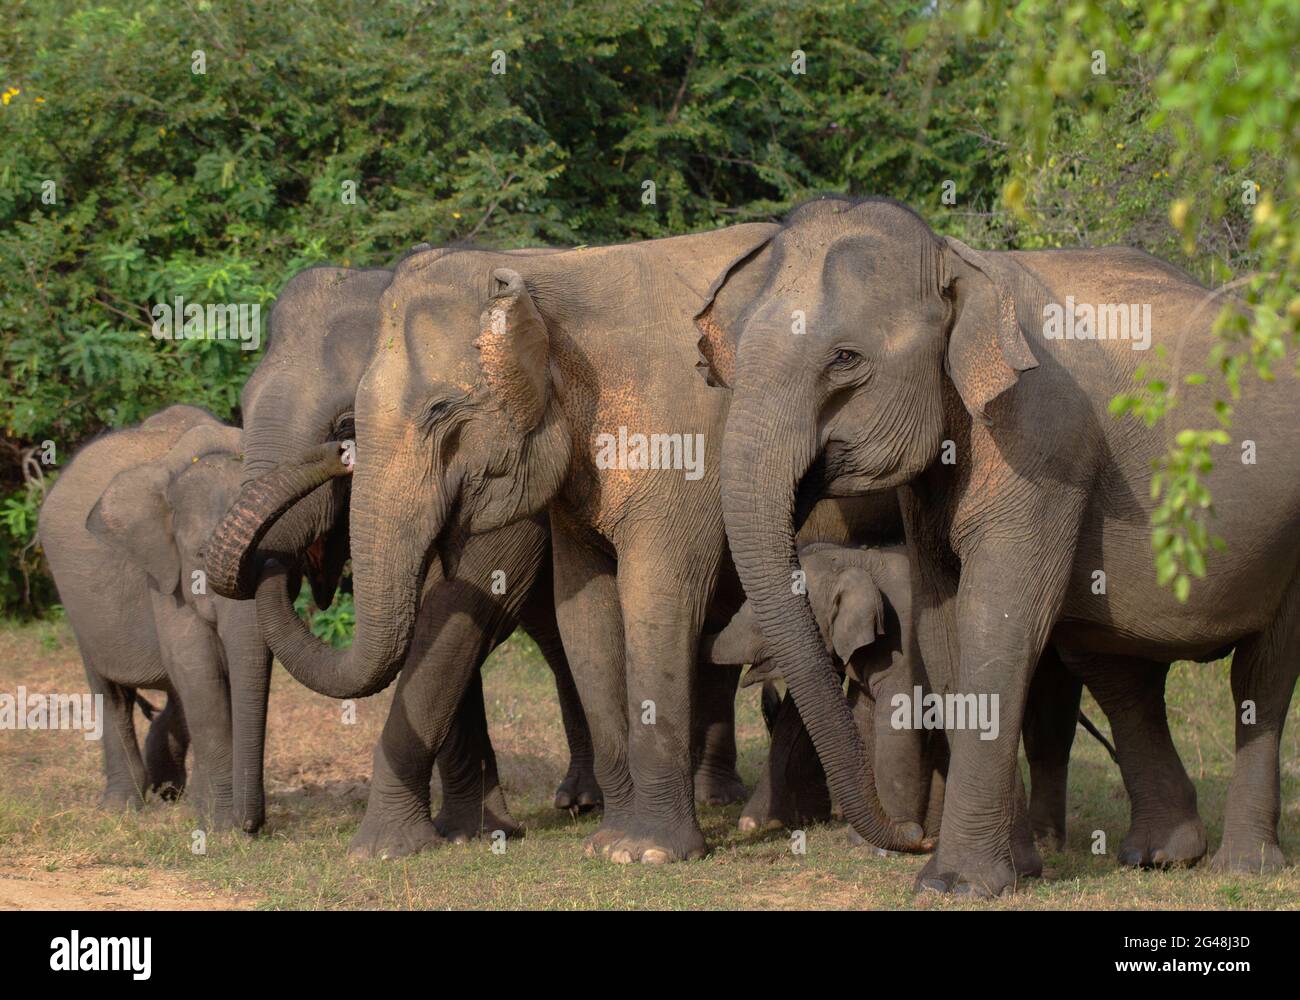 Elephant herd in the wild; elephants in the wild; Wild elephants; Elephant baby and mom; baby elephant; Elephant herd from Yala National Park, Sri Lan Stock Photo